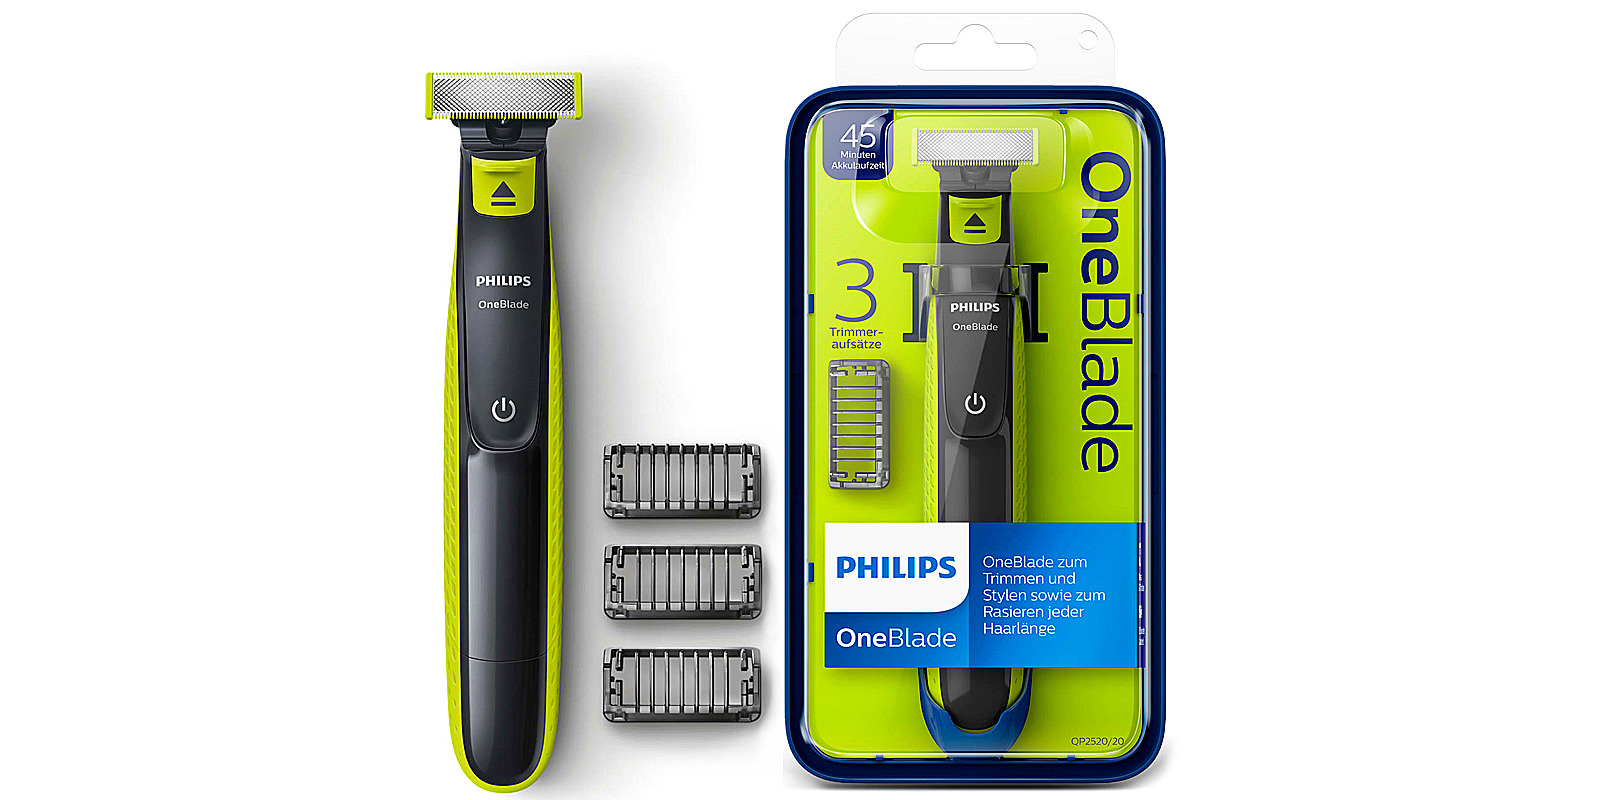 Philips oneblade qp1424 10. Триммер Филипс Oniblade qp2520. Philips ONEBLADE qp2620. Триммер Филипс Oniblade qp2520/20. Бритва Philips one Blade.